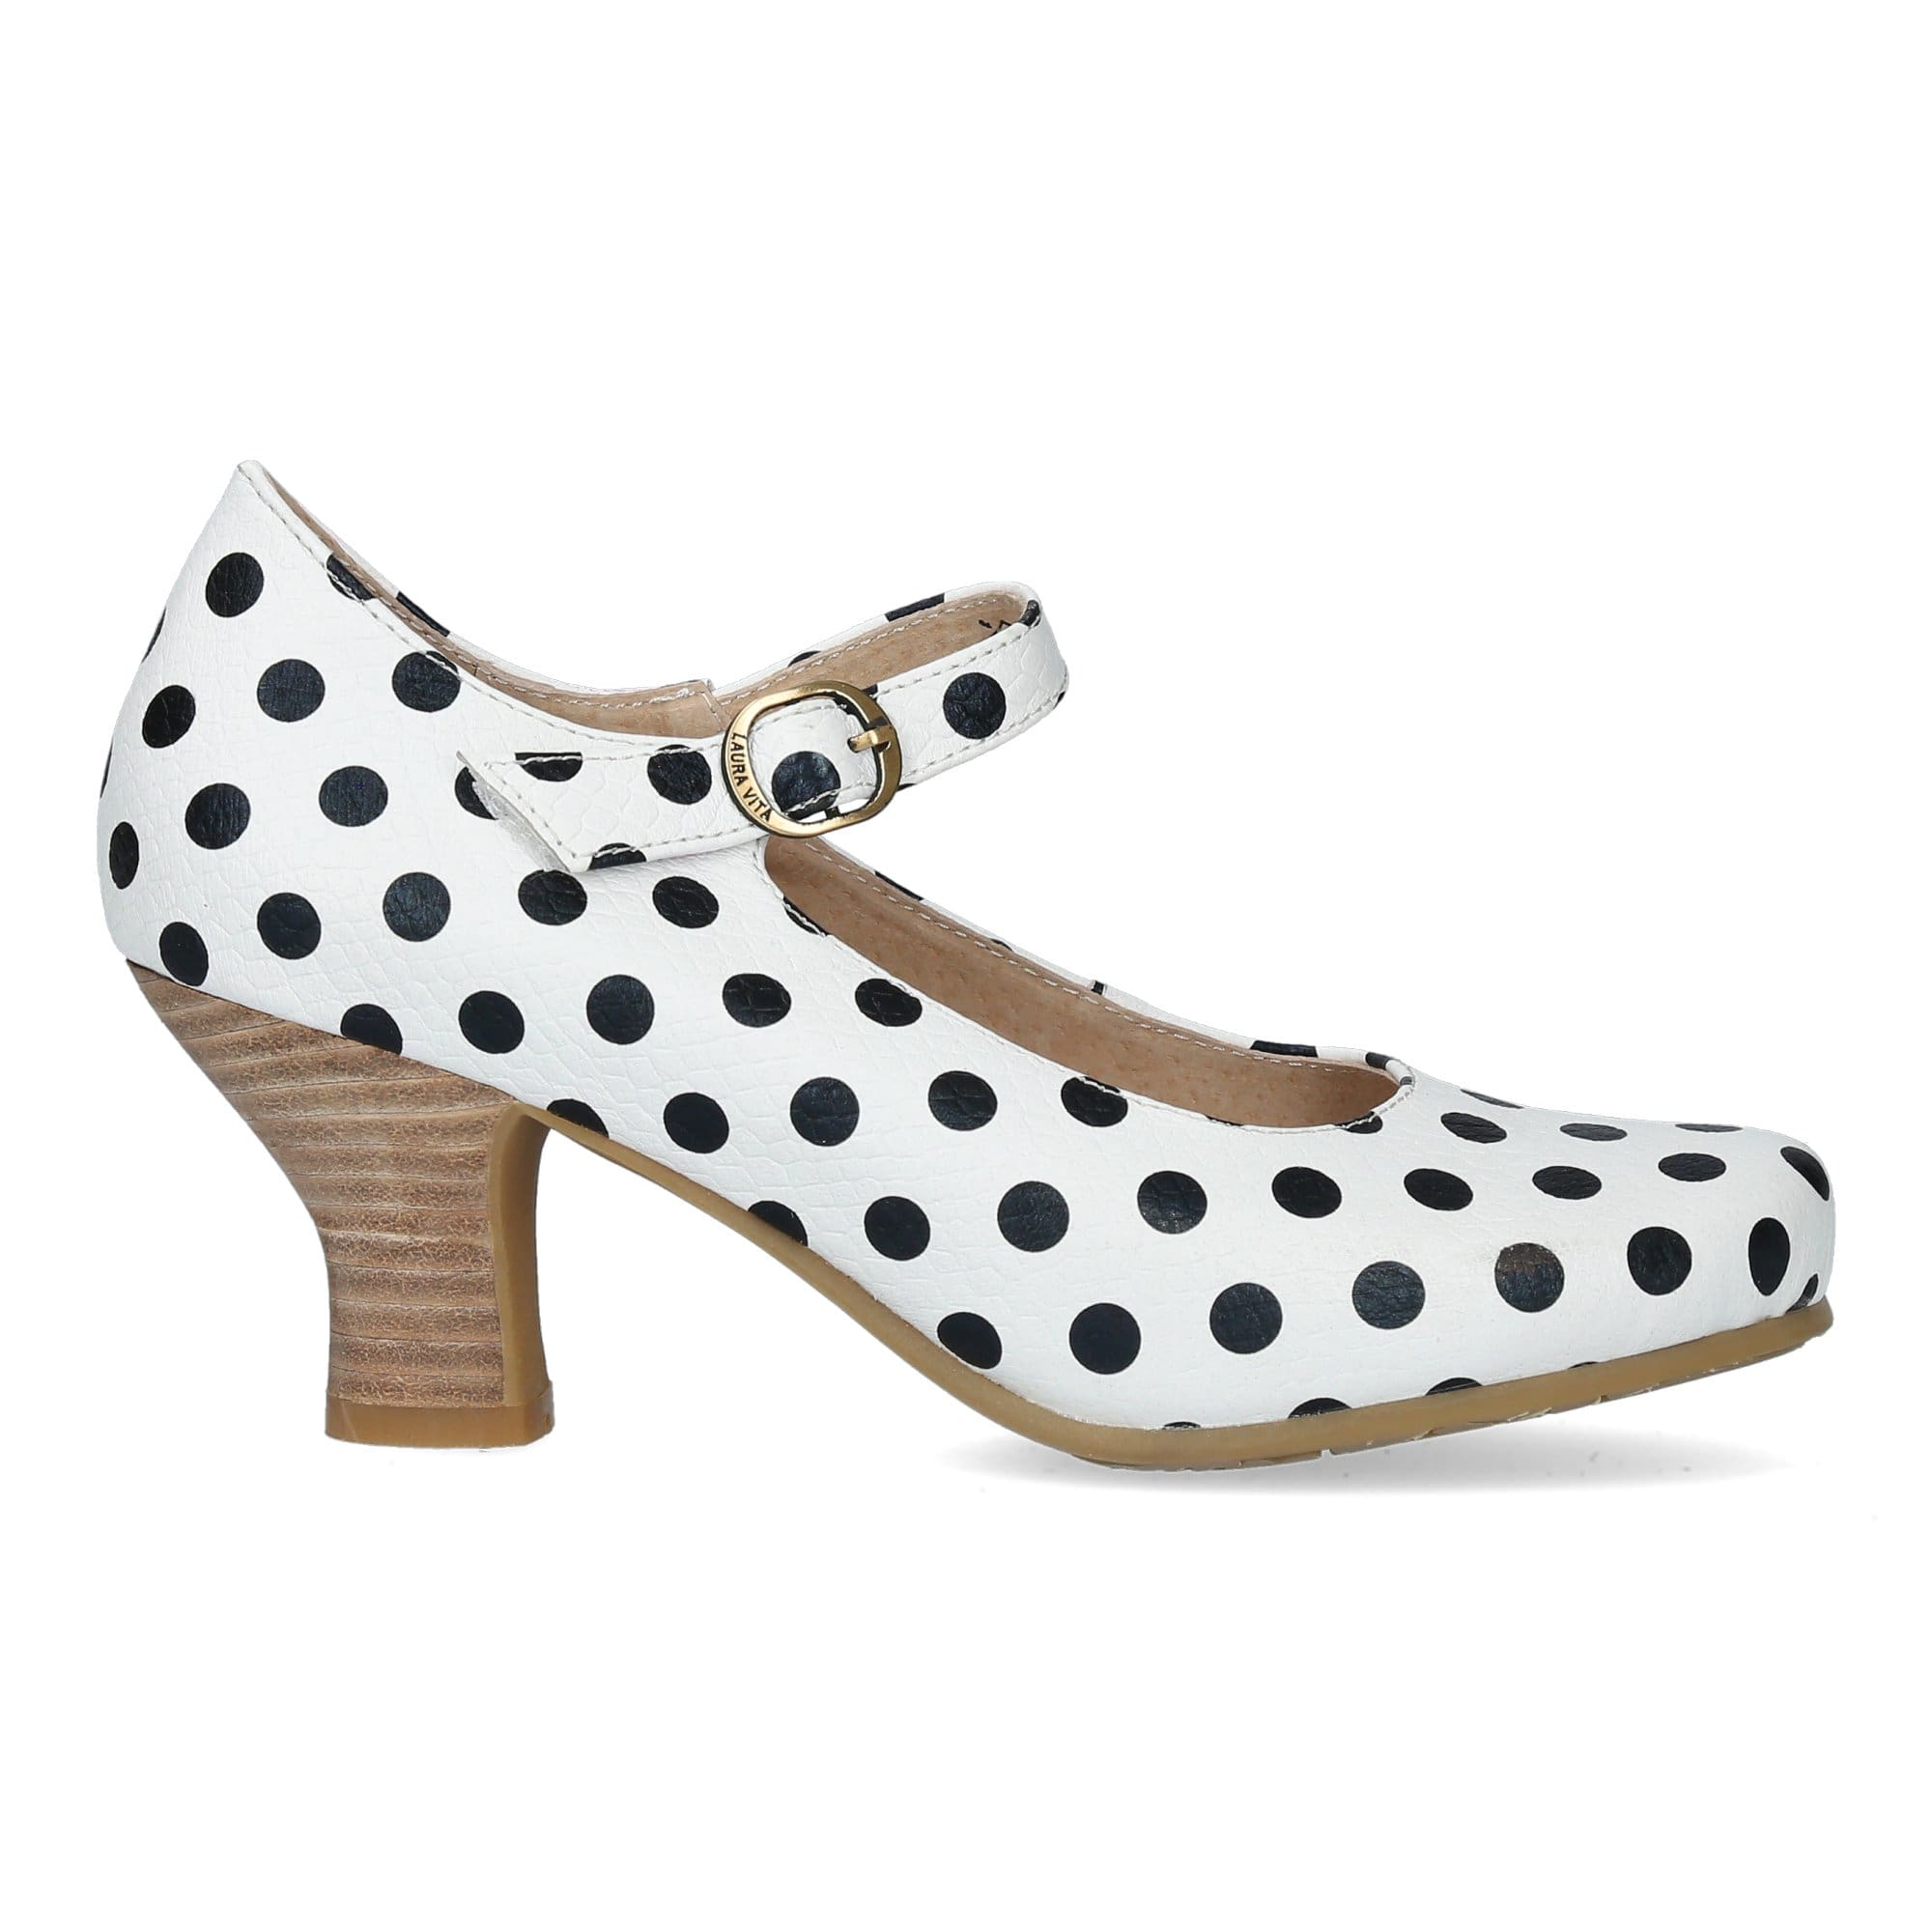 Chaussures CANDICE 0281 - 35 / Blanc - Escarpin